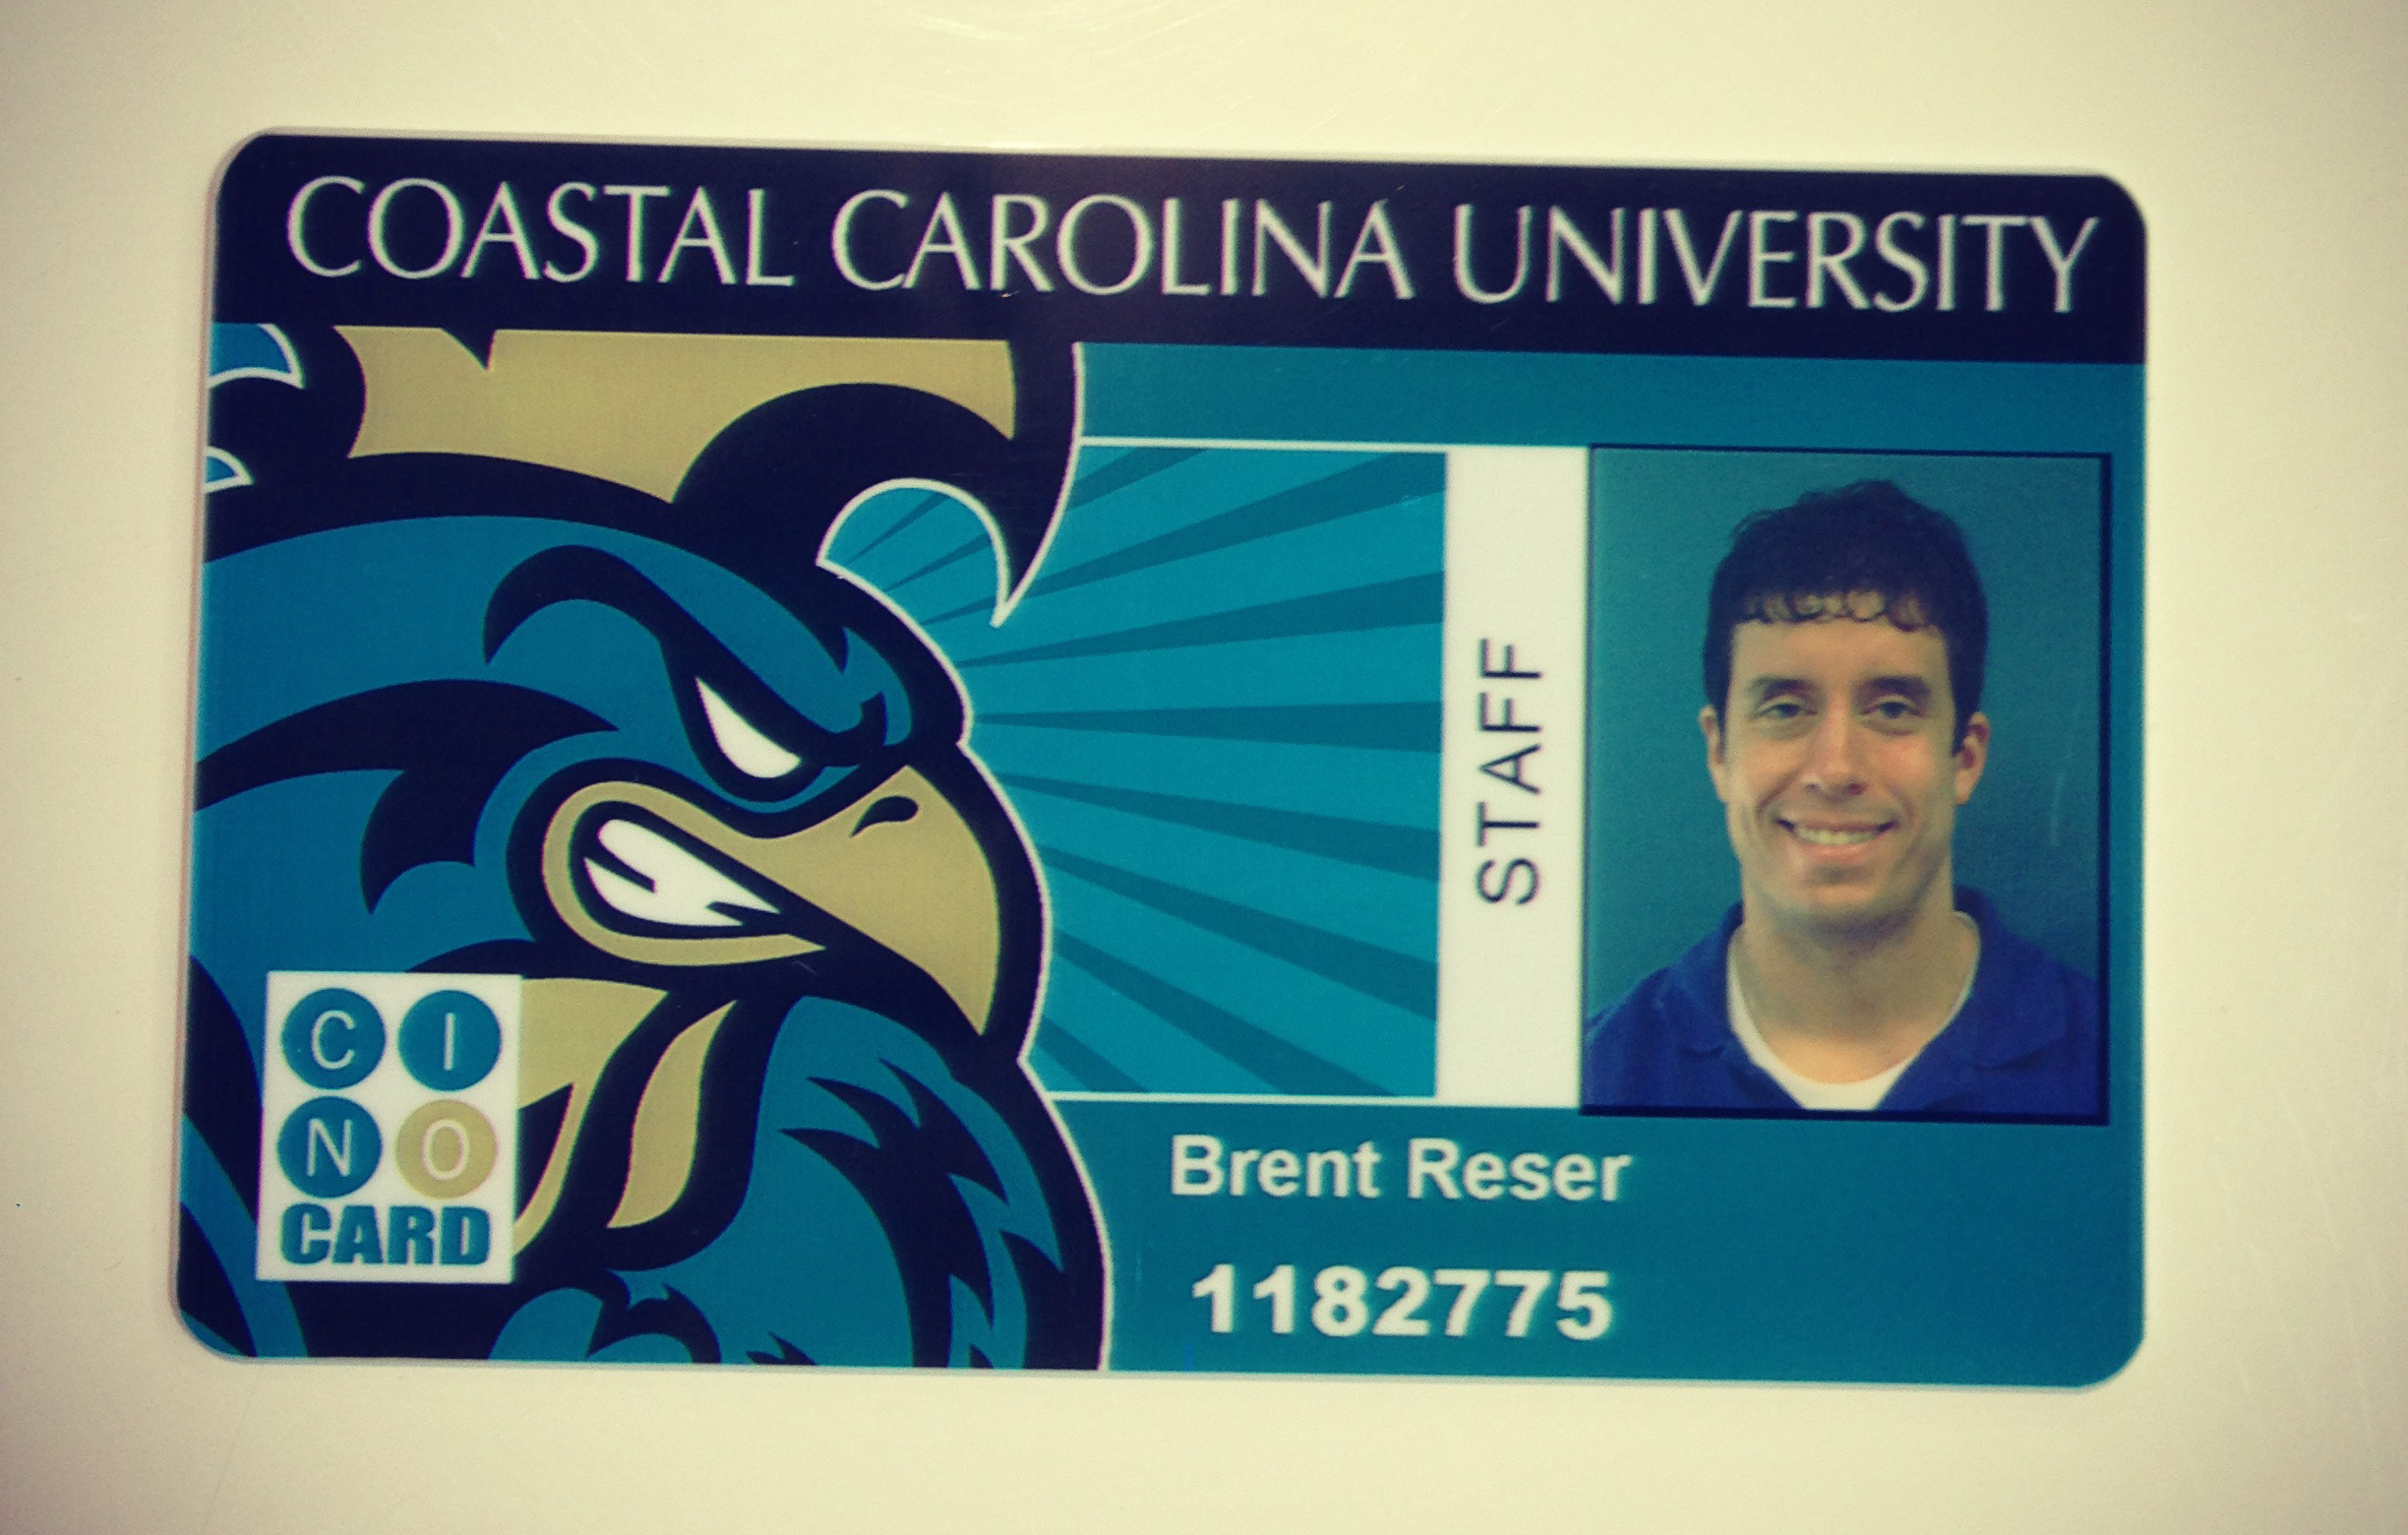 It is official! I am a Coastal Carolina University employee.